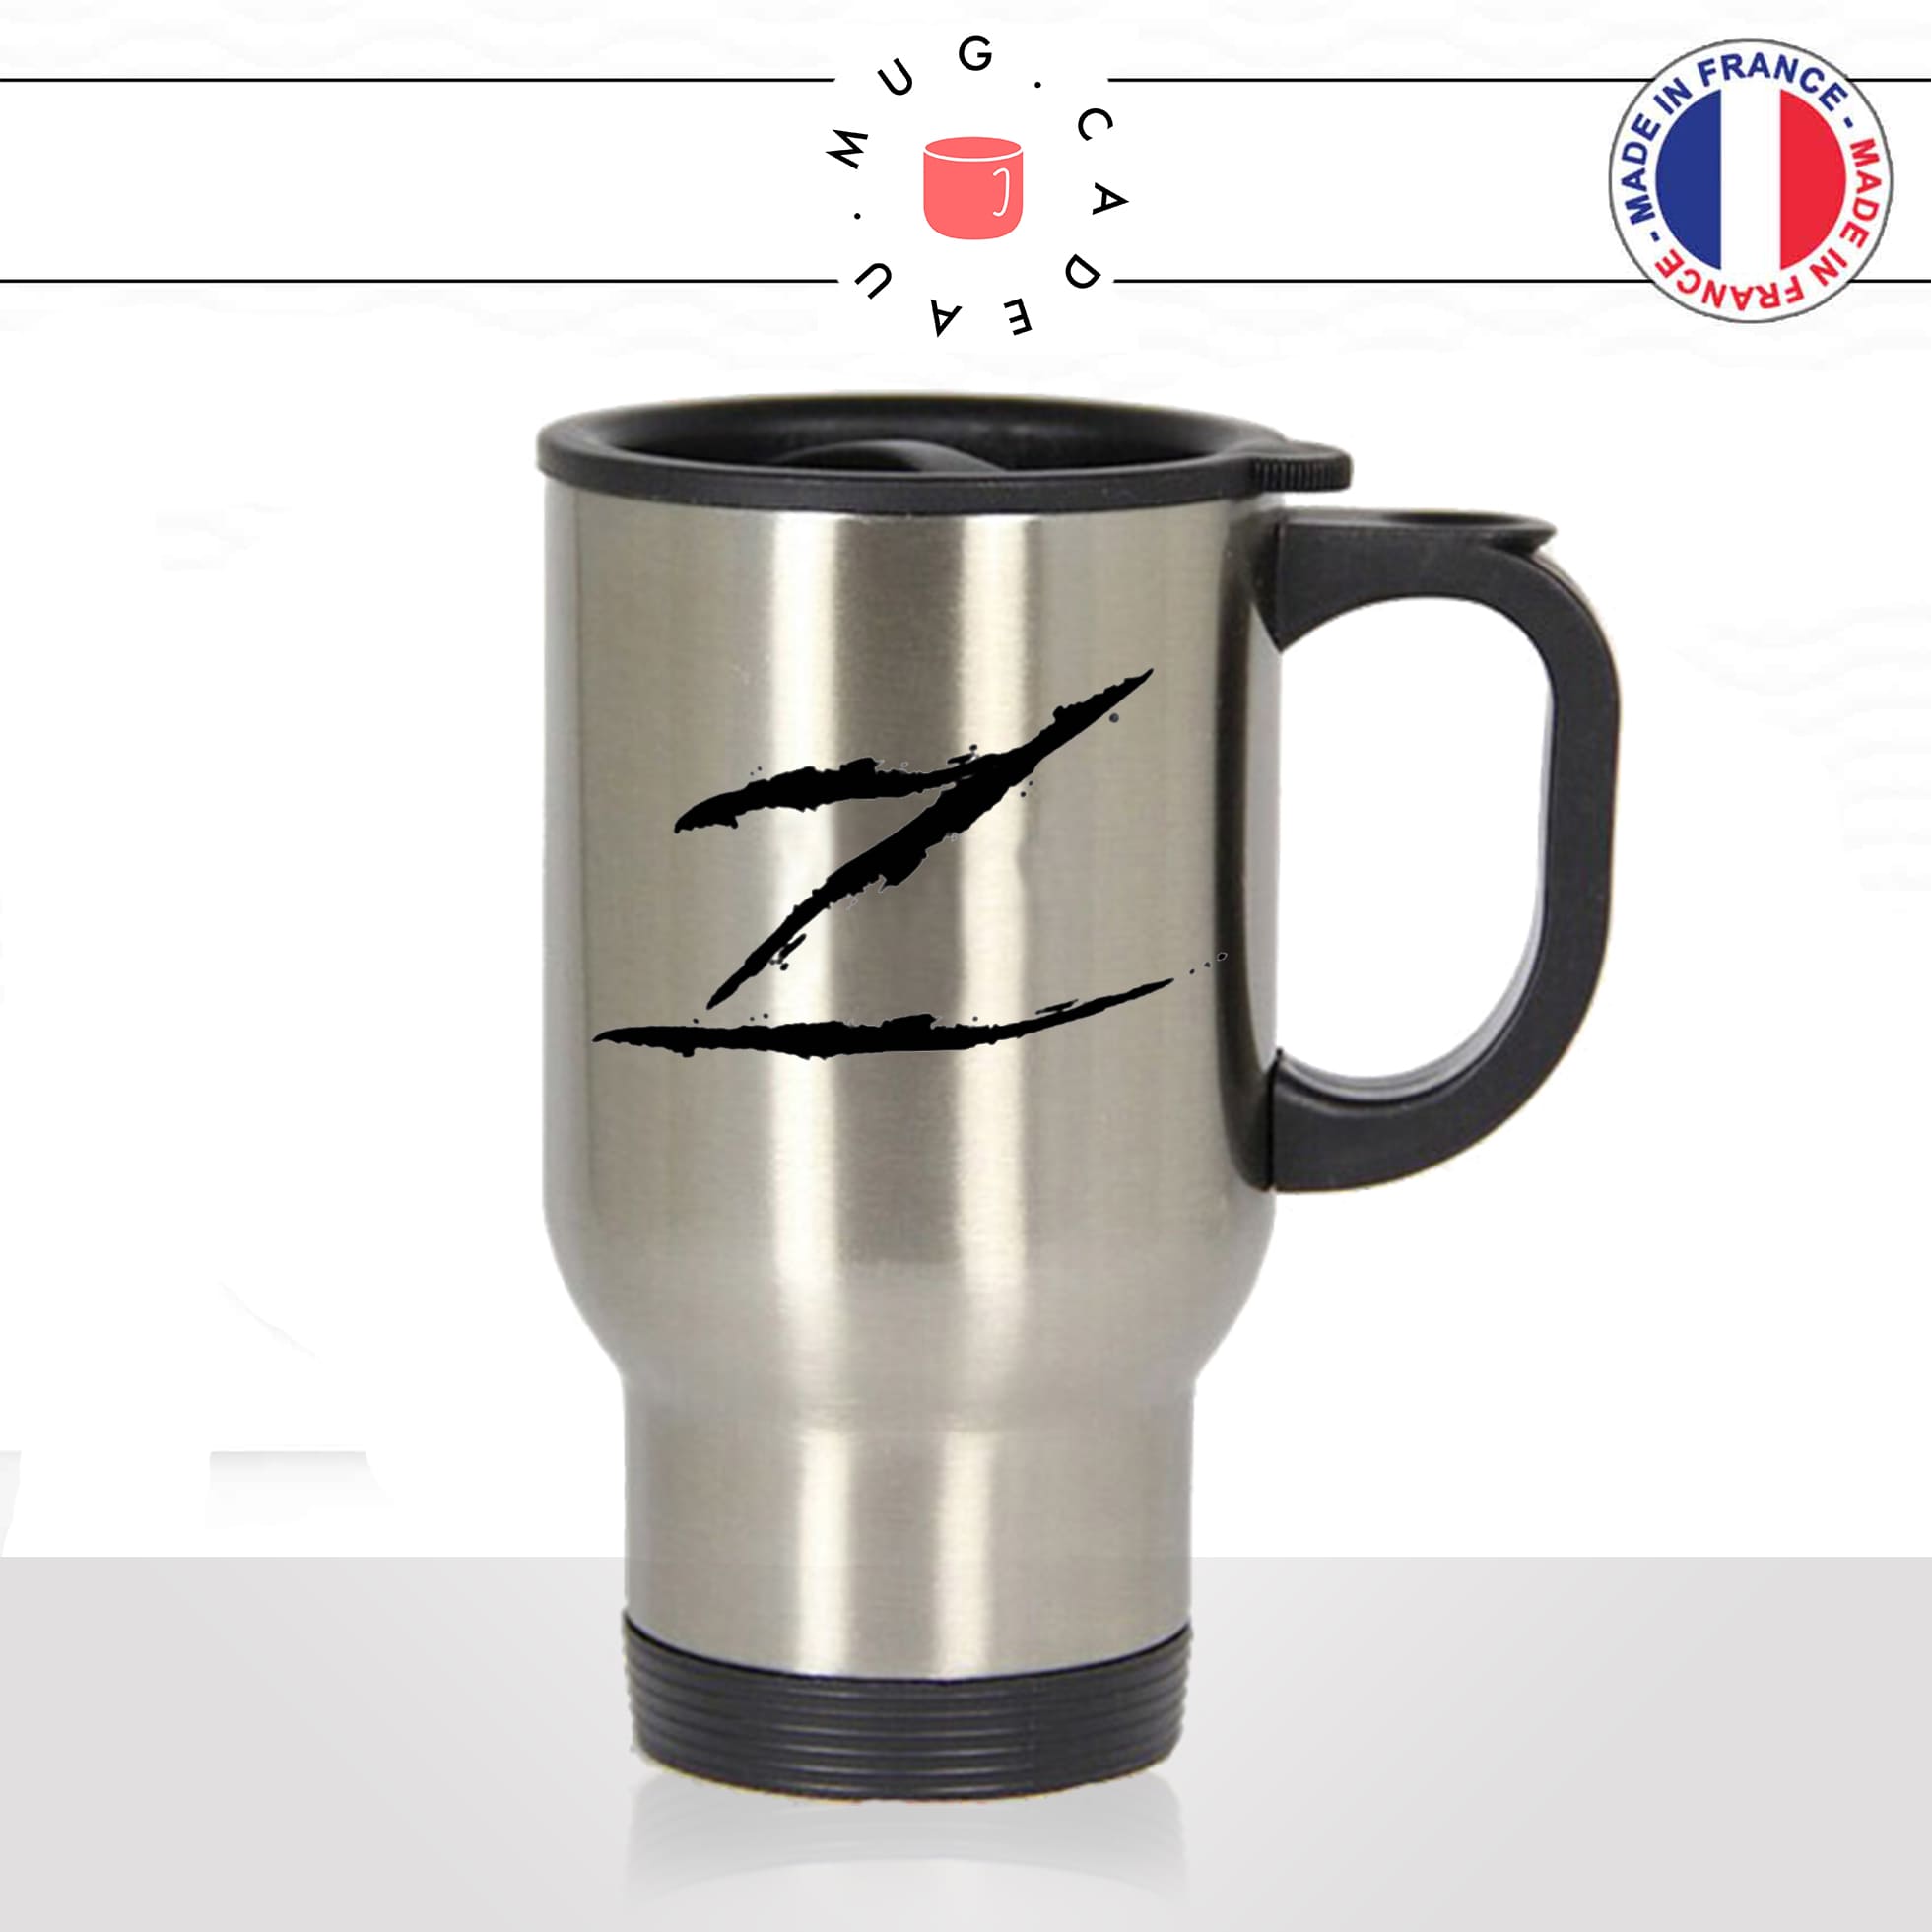 mug-tasse-thermos-isotherme-z-zorro-generation-film-banderas-héro-zemmour-2022-homme-femme-humour-fun-cool-idée-cadeau-original2